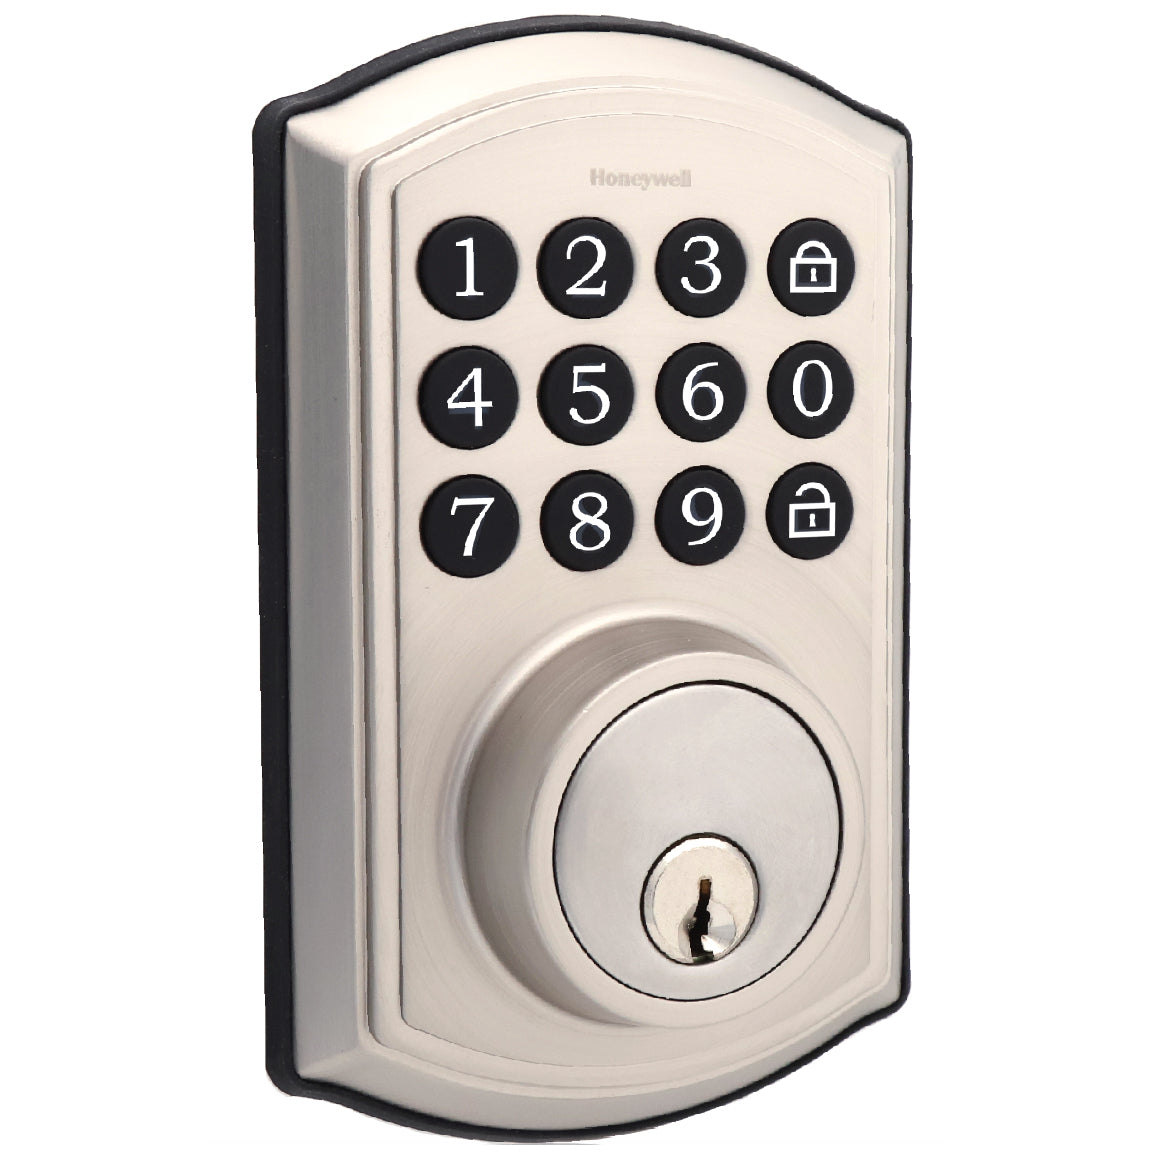 Honeywell 8635024 Digital Deadbolt Door Lock with Electronic Keypad